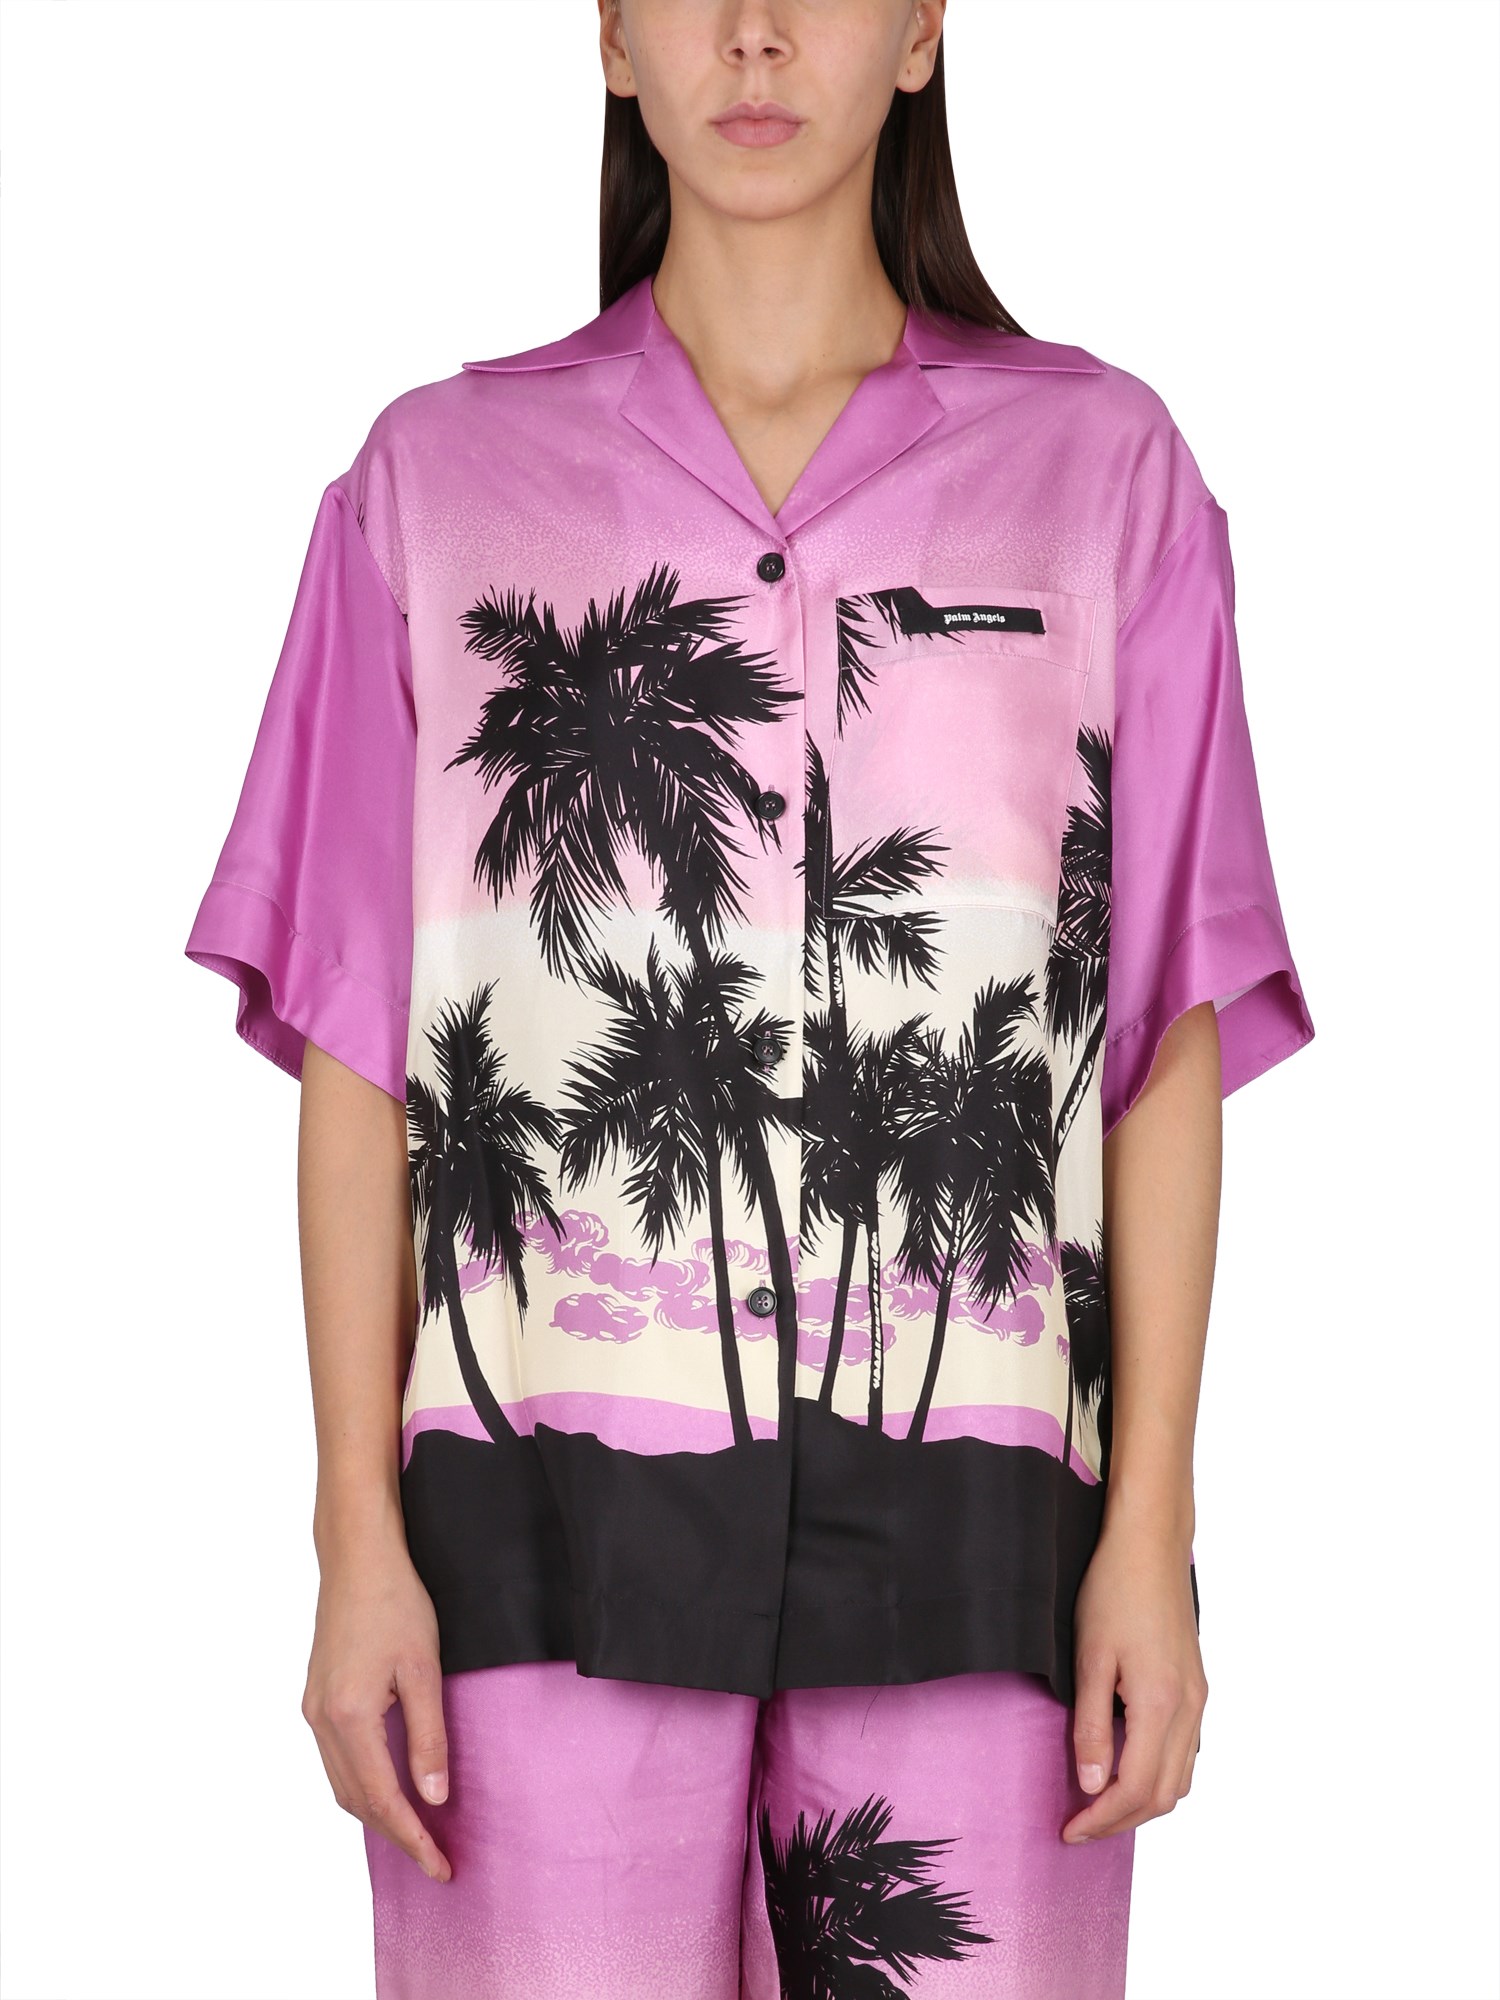 palm angels sunset print shirt